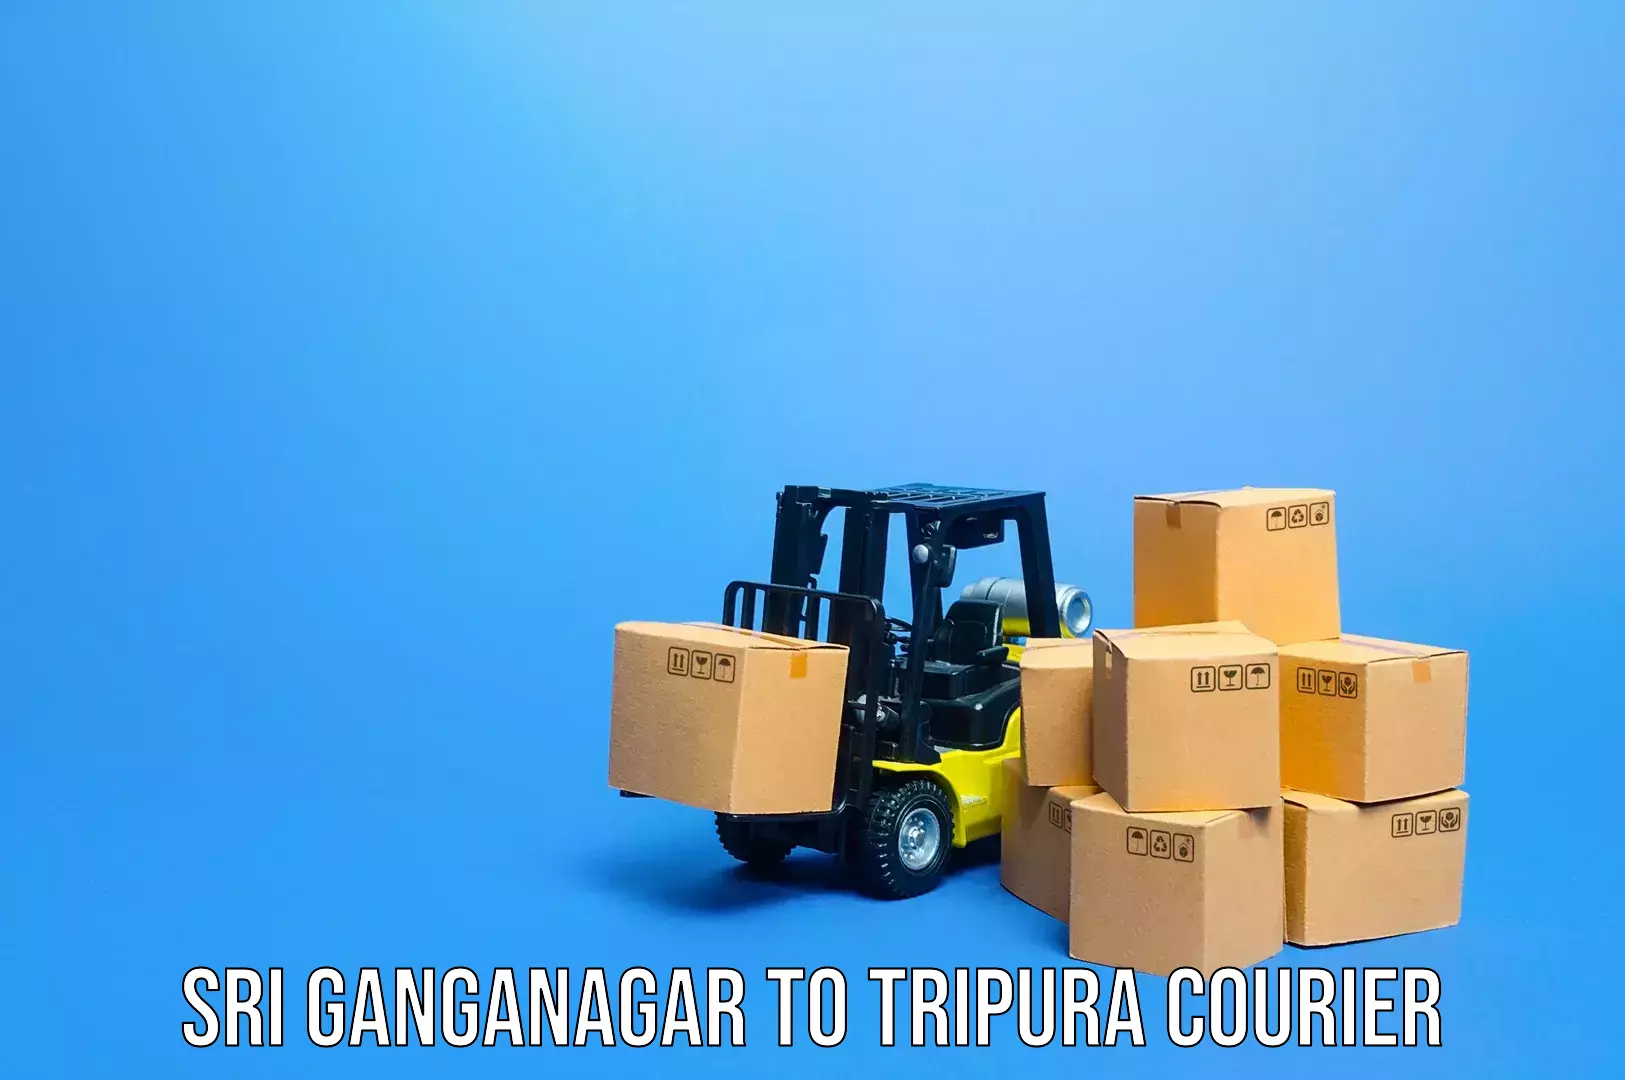 Baggage transport quote Sri Ganganagar to Udaipur Tripura